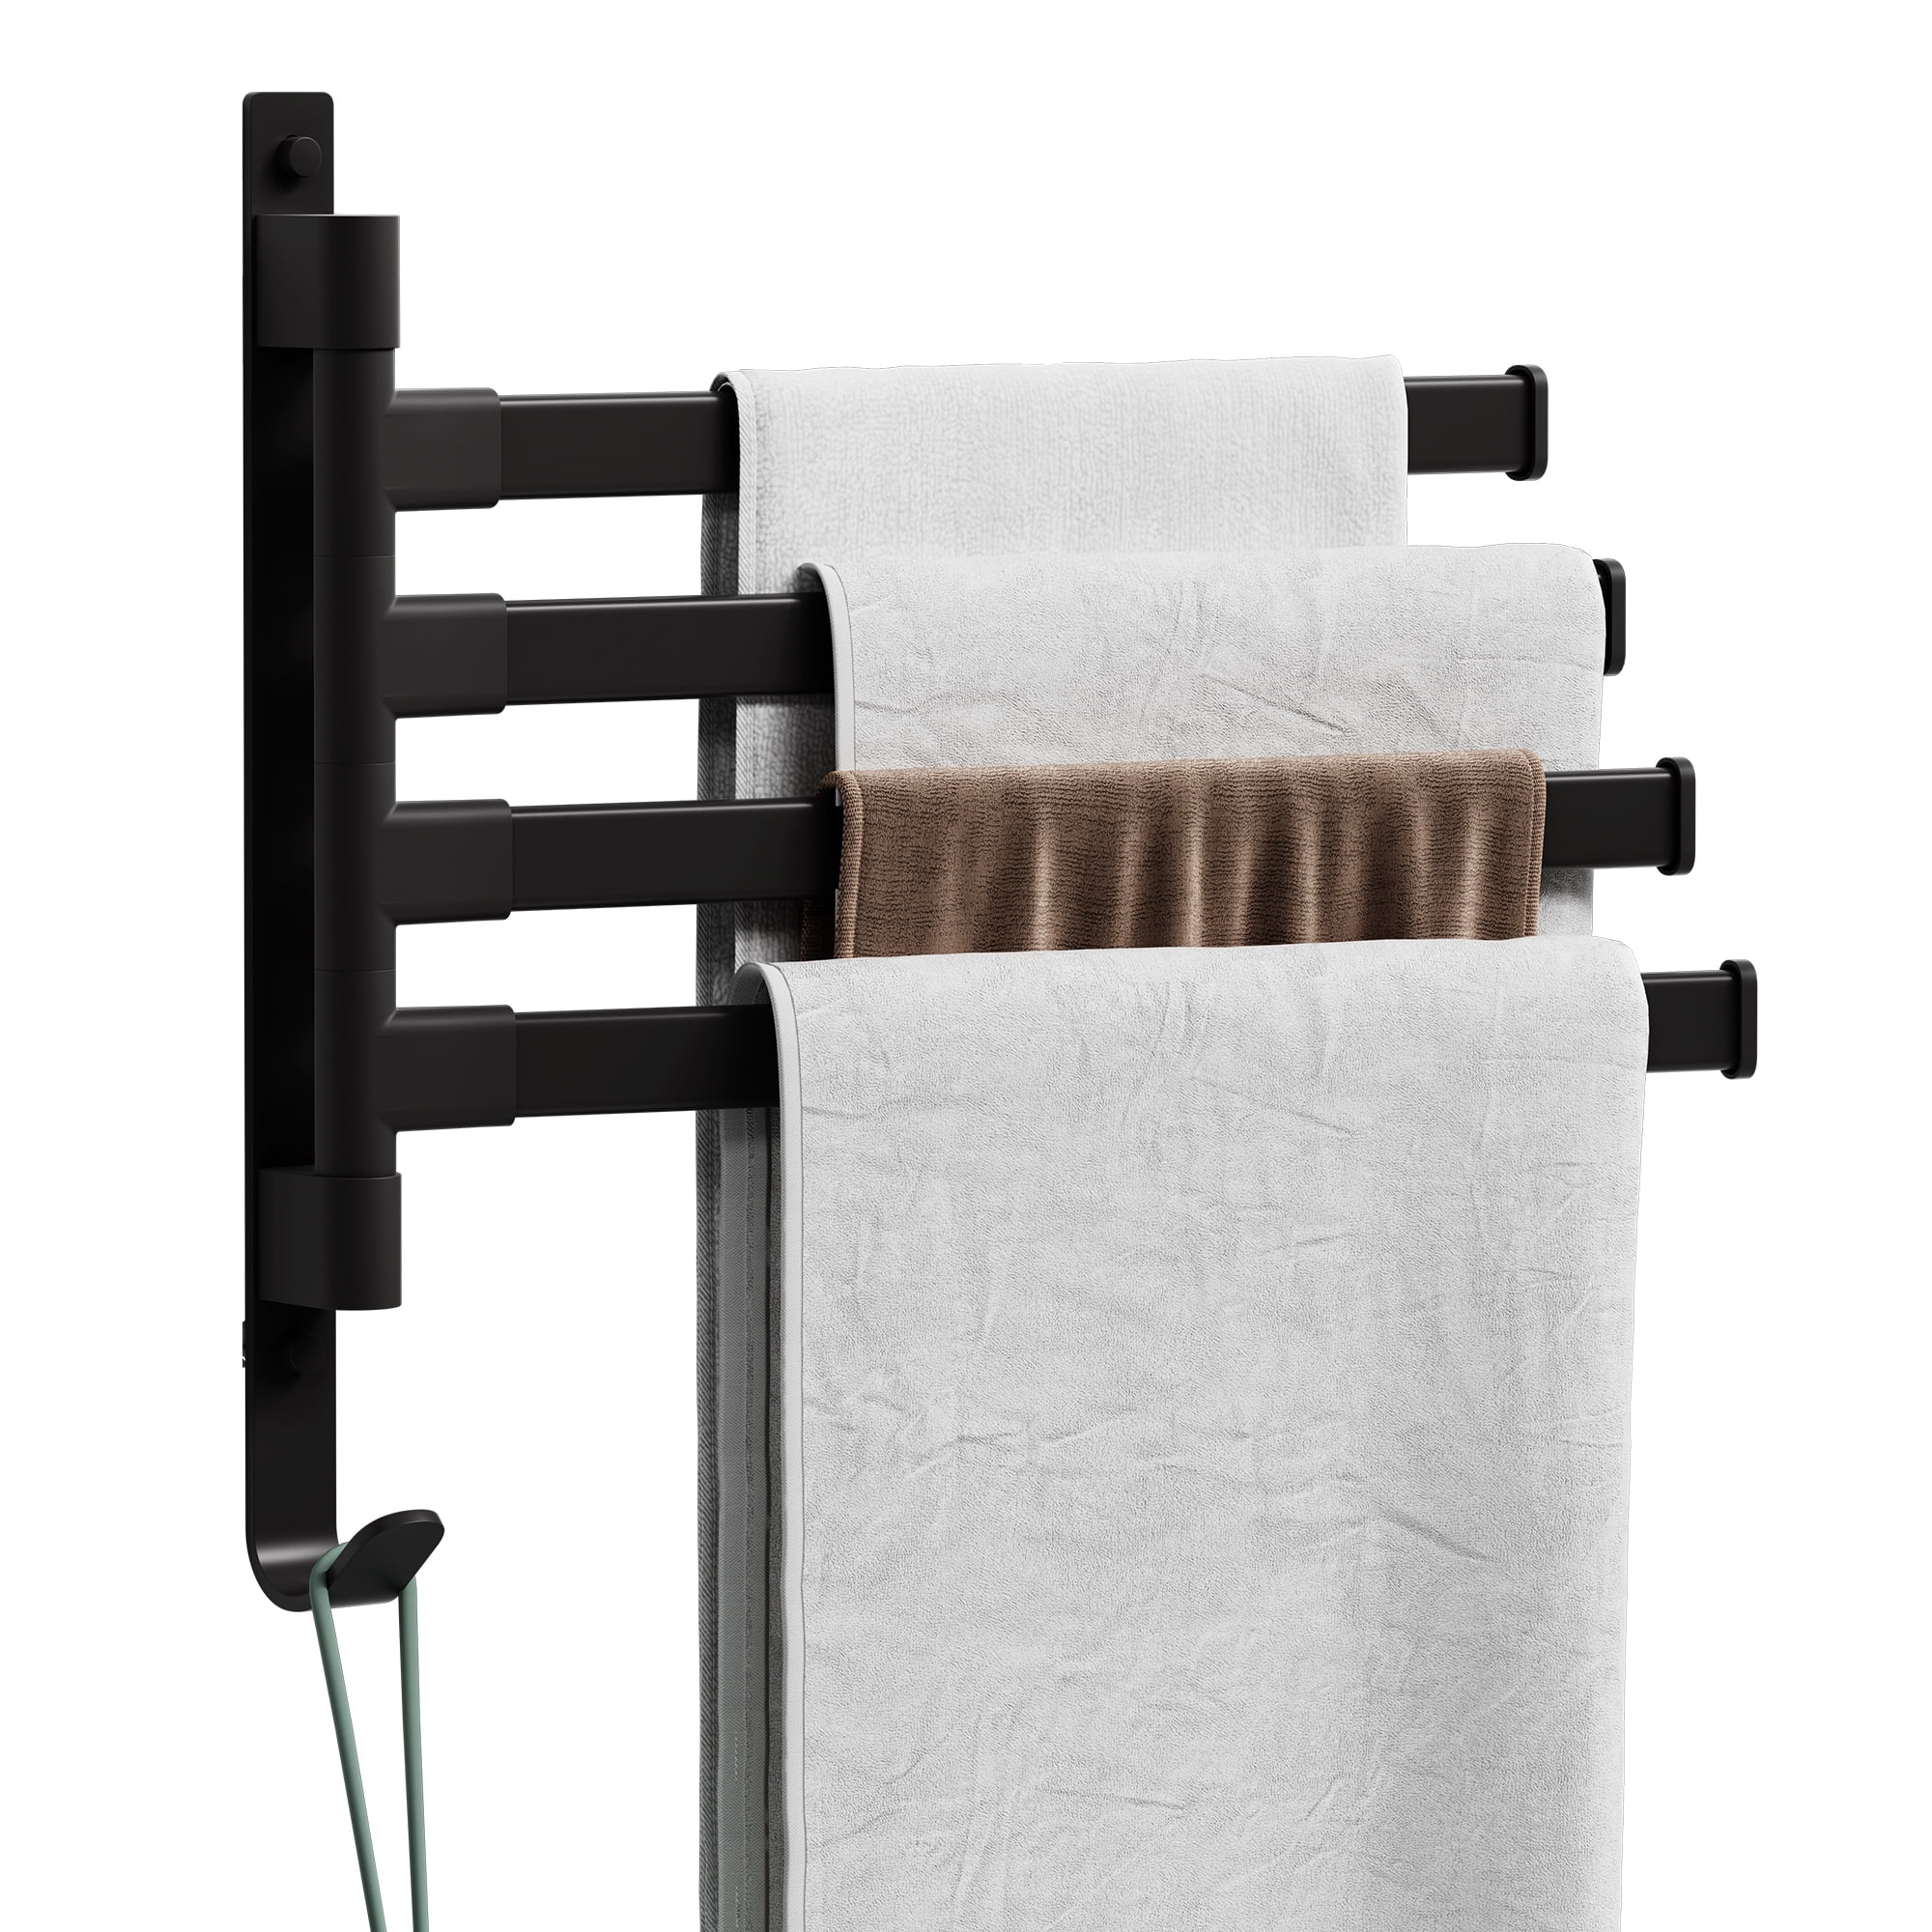 KES Swivel Towel Bar SUS 304 Stainless Steel 4-Arm Bathroom Swing Hanger  Towel Rack Holder Storage Organizer Space Saving Wall Mount Brushed Finish